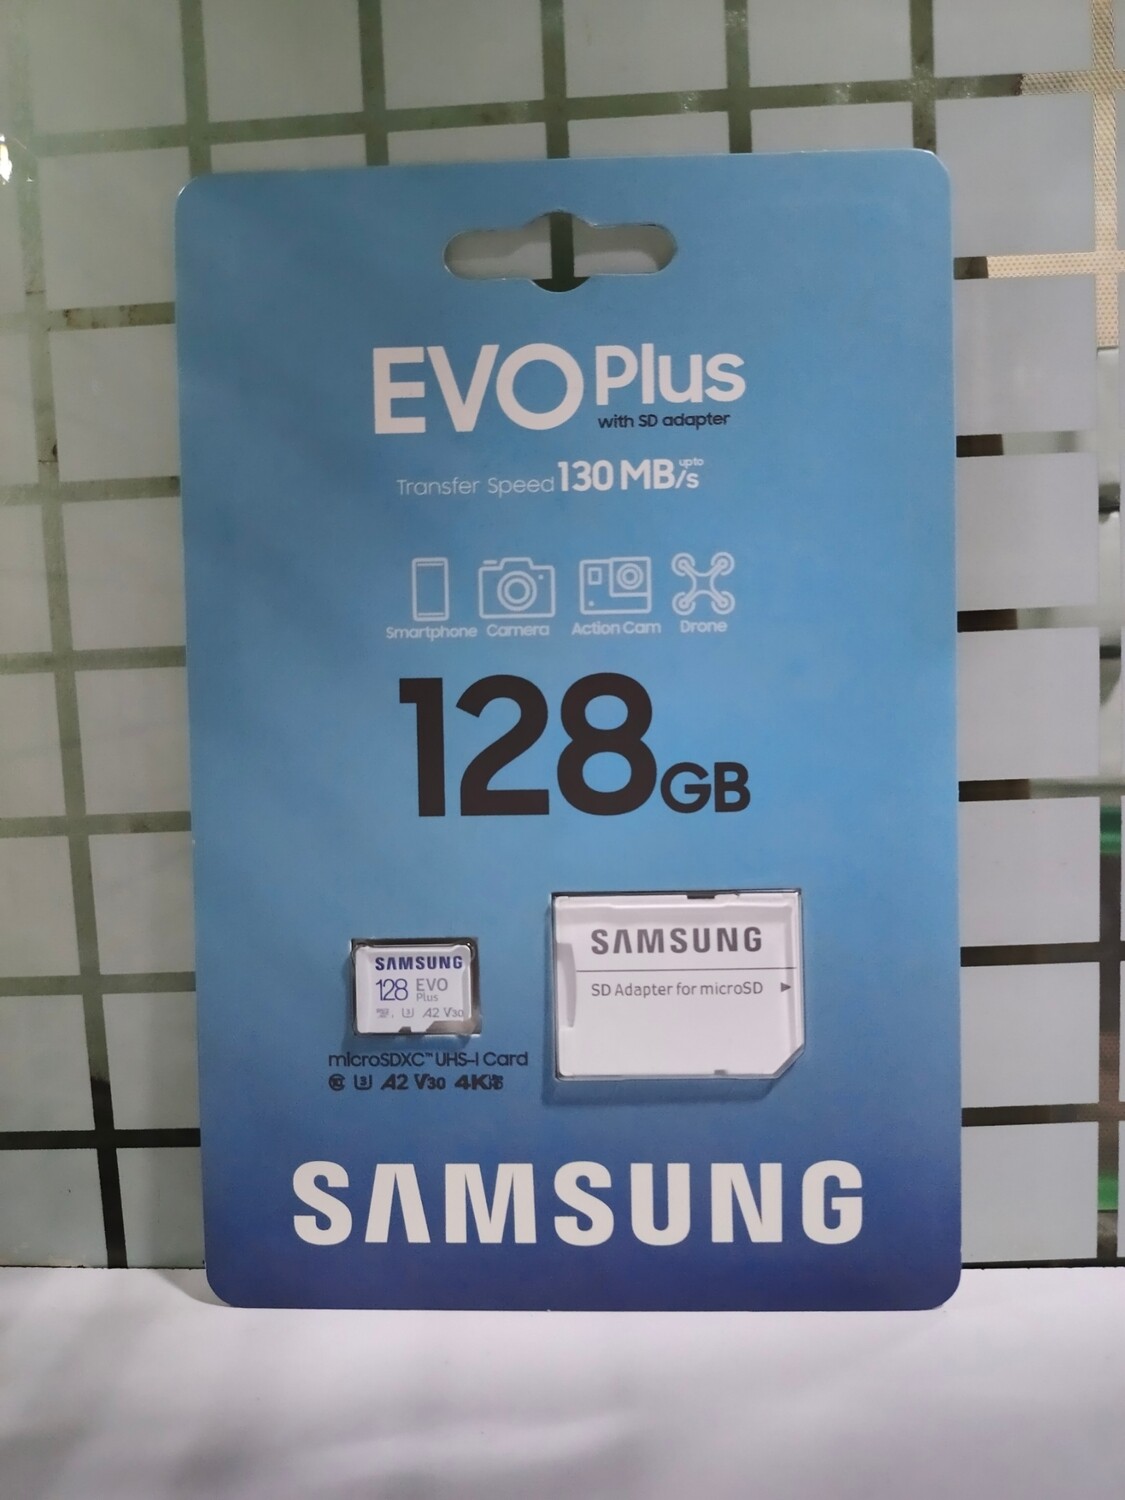 Samsung 128GB EVO Plus 130mb/s Memory Card